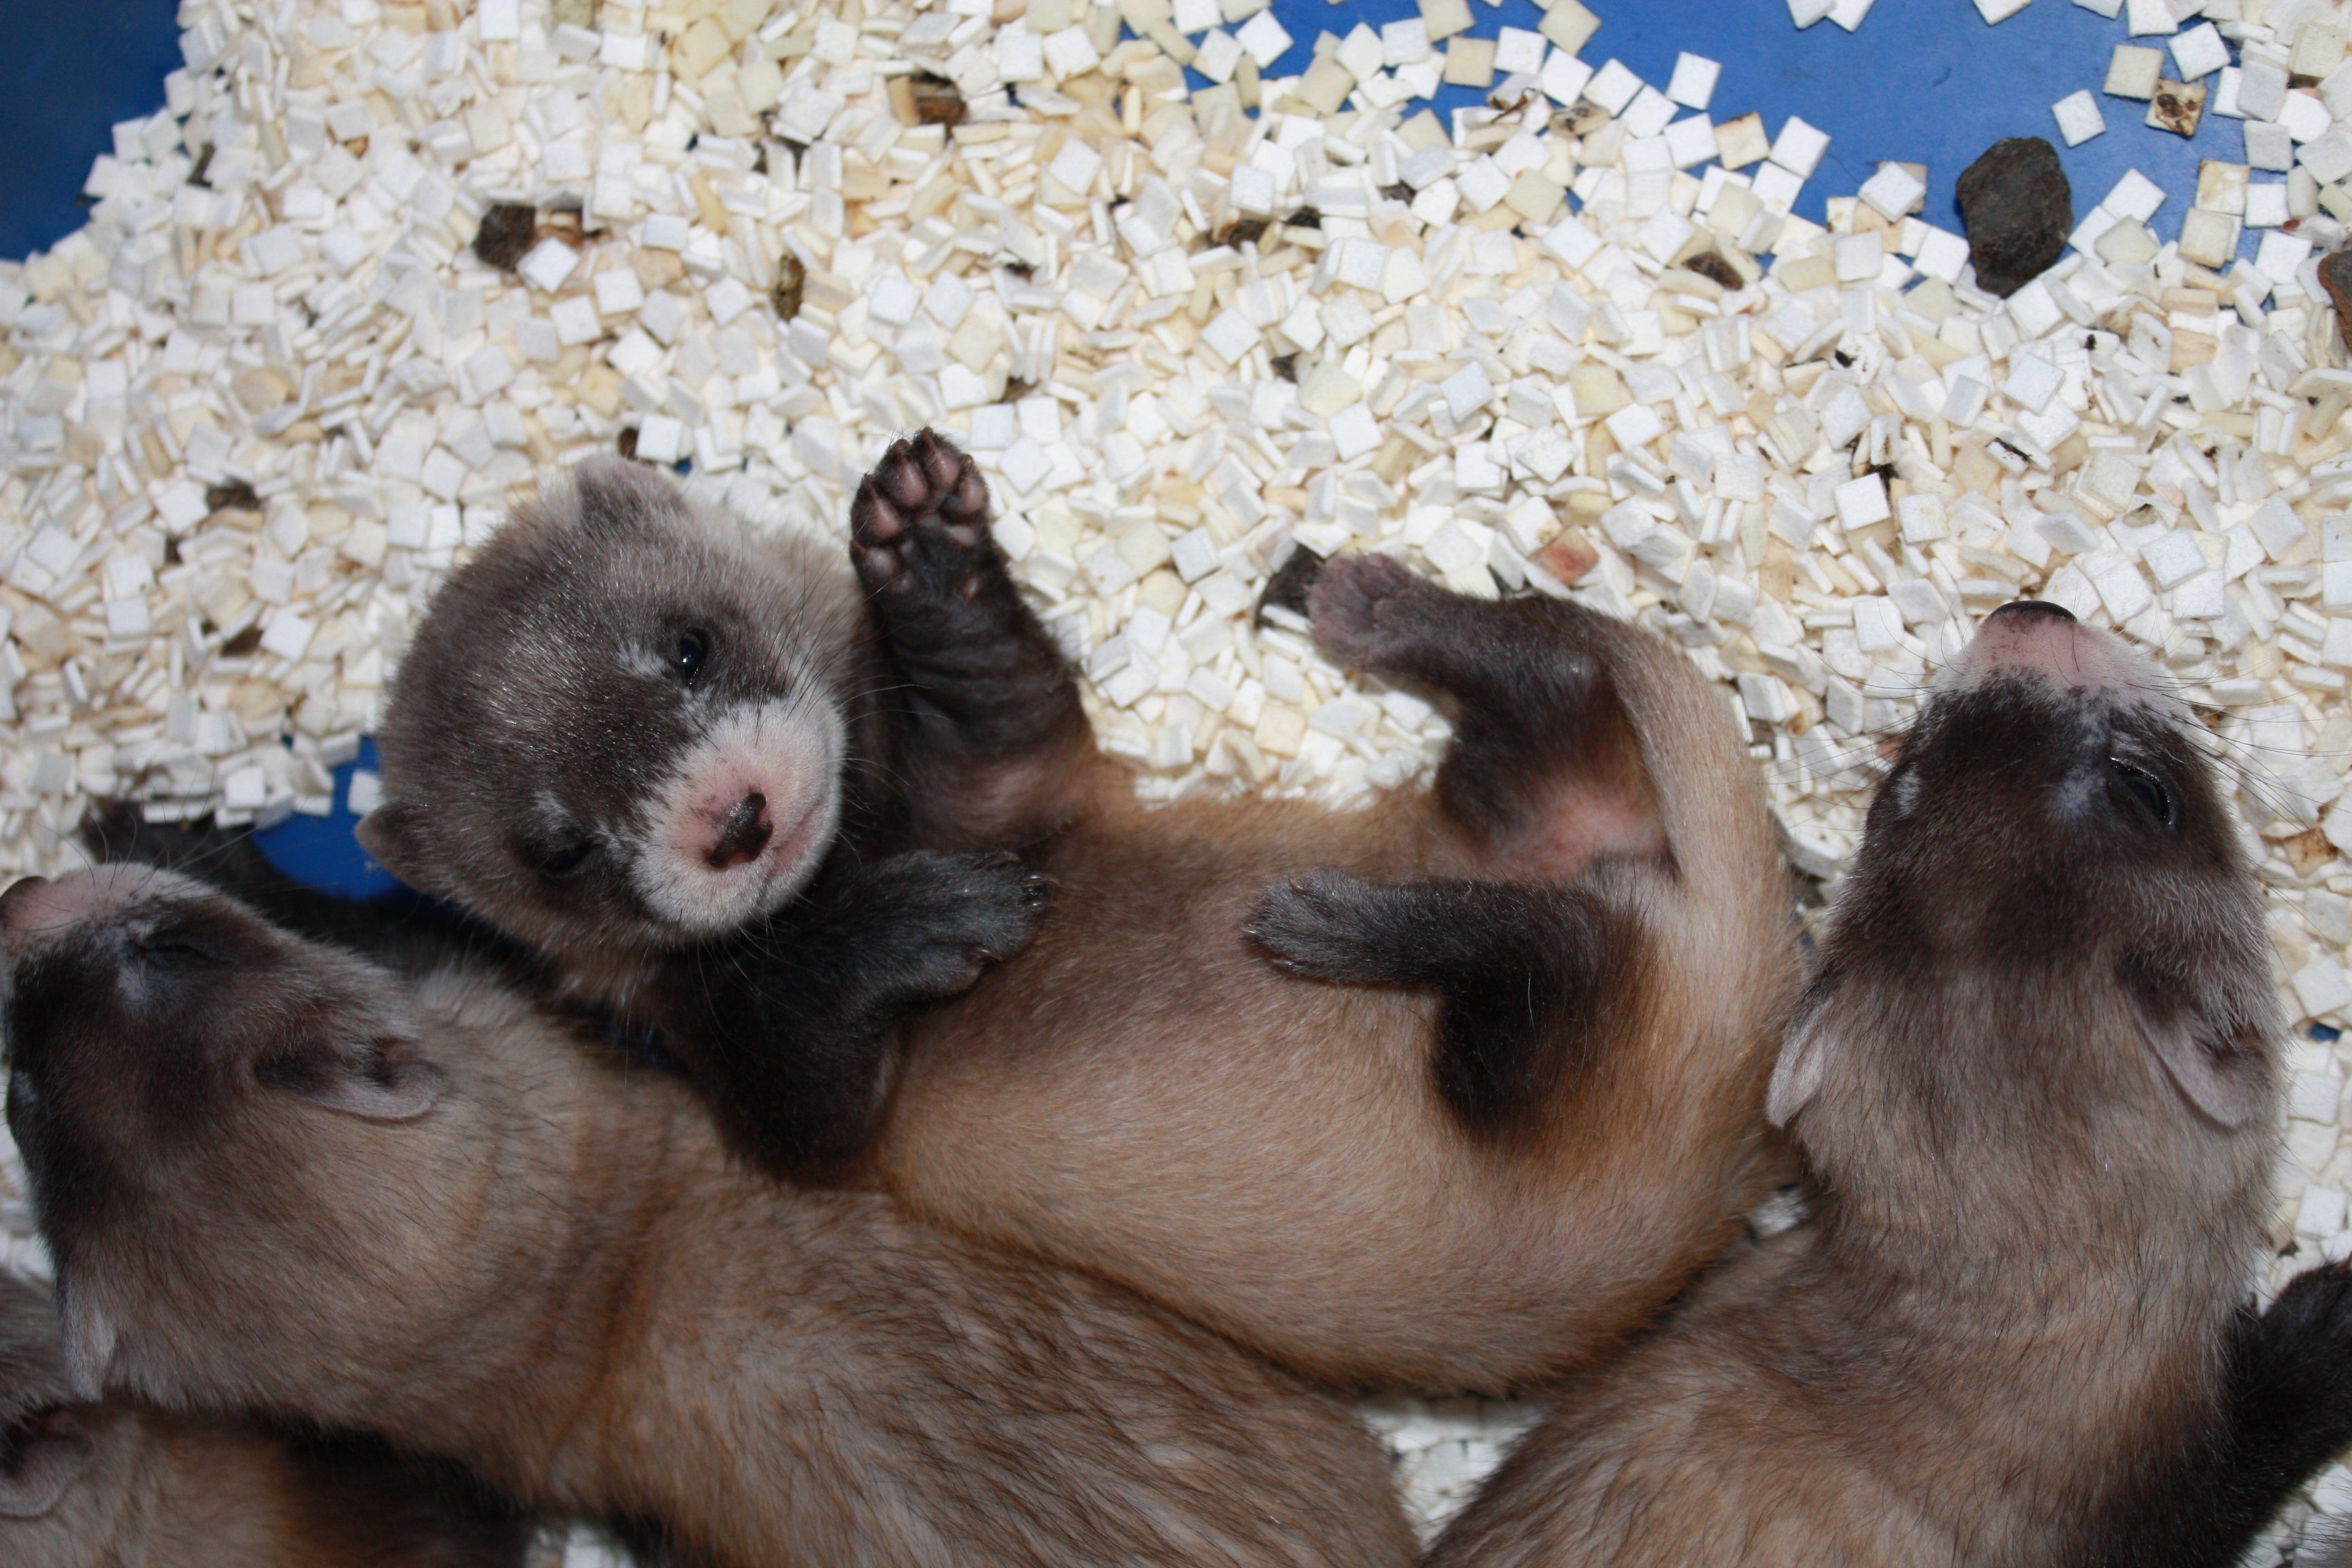 SCBI celebrated black-footed ferret births this summer